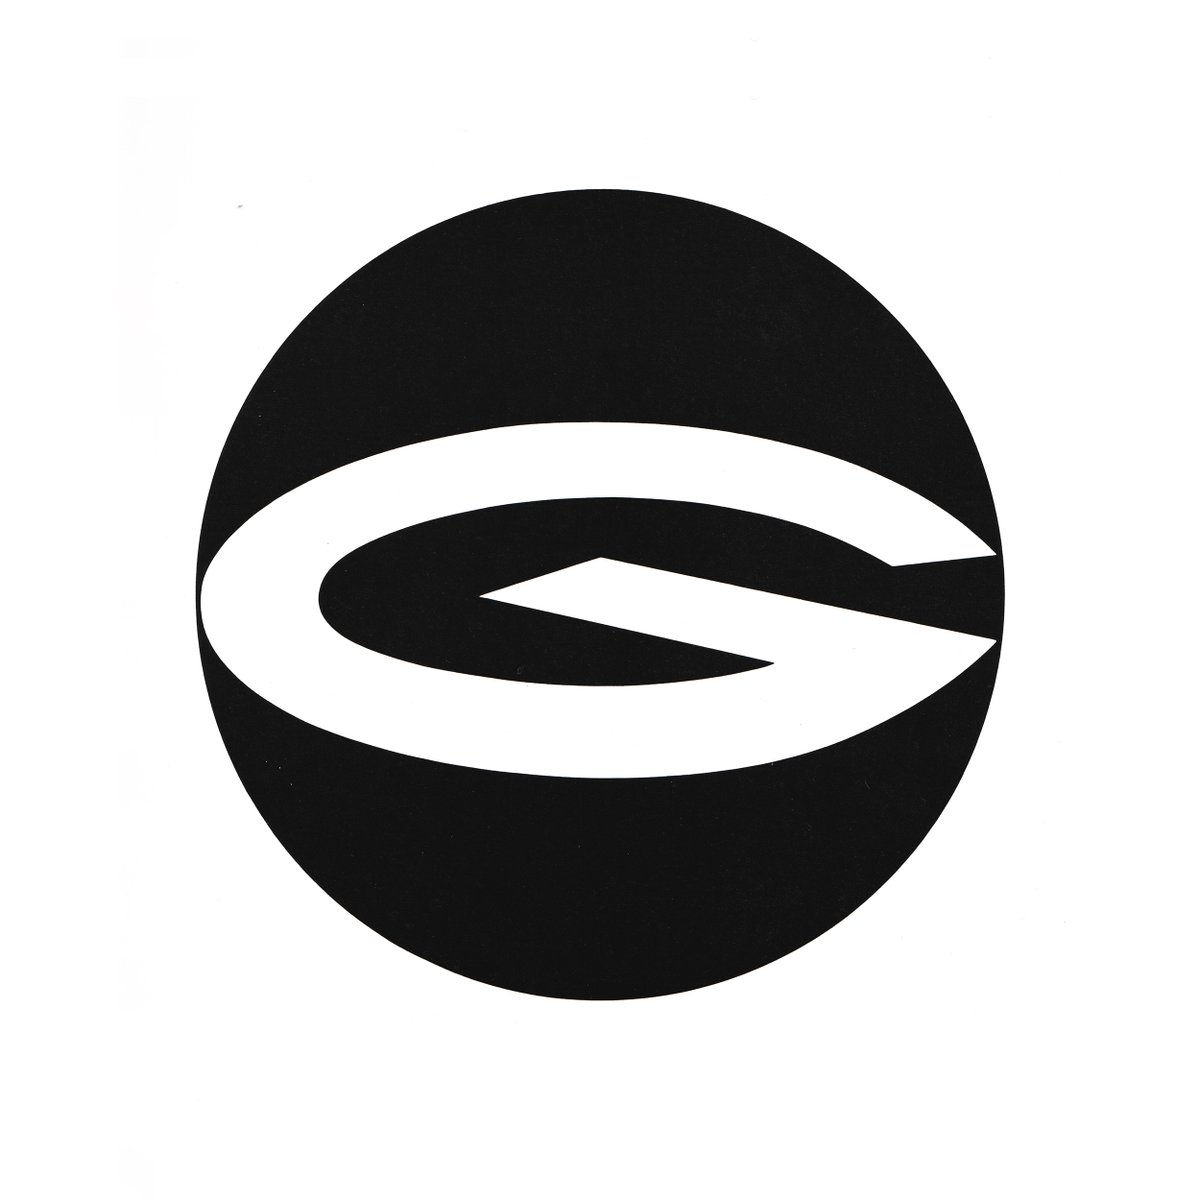 Logo Concepts: Japan graphic Designer's Association. Concepts by Mitsuo Katsui, Yoshio Hayakawa & Yusaku Kamekura. Final design by Kazuo Kishimoto.

Discover more logos at logo-archive.org

#logos #branding #logodesign #graphicdesign #japanesedesign #logoarchive